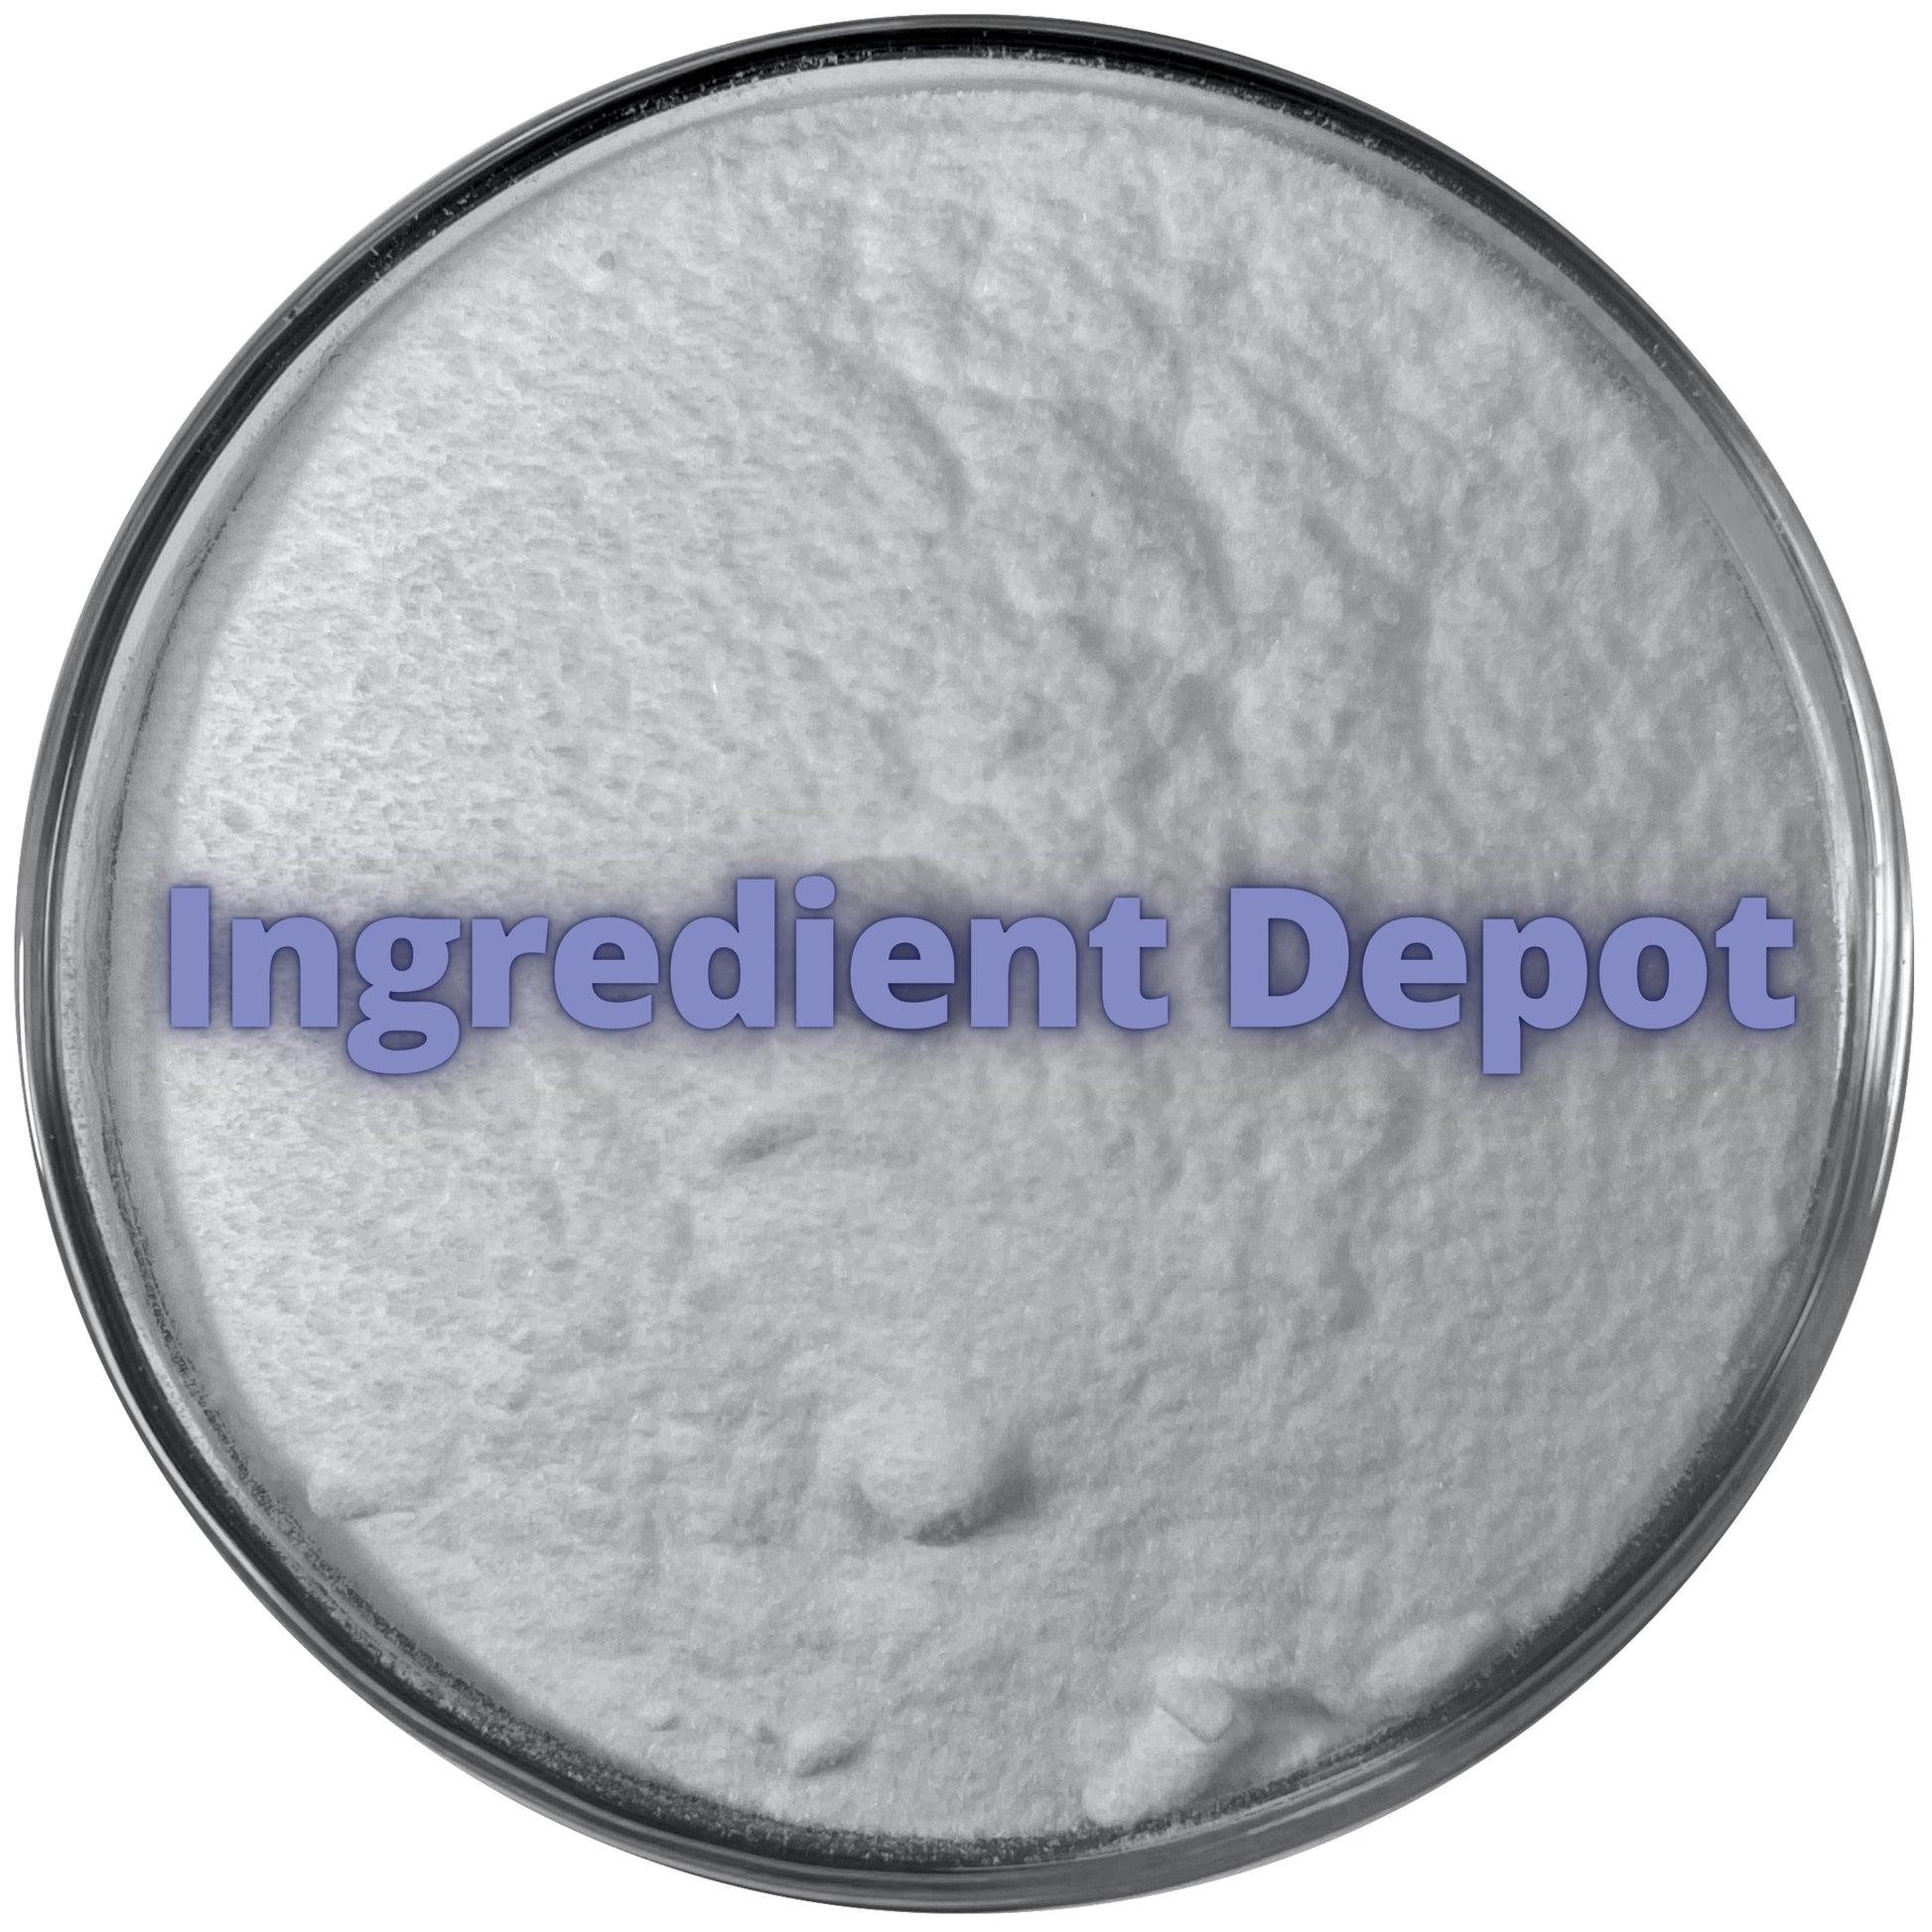 Titanium Dioxide Food and USP Grade 1 kg - IngredientDepot.com